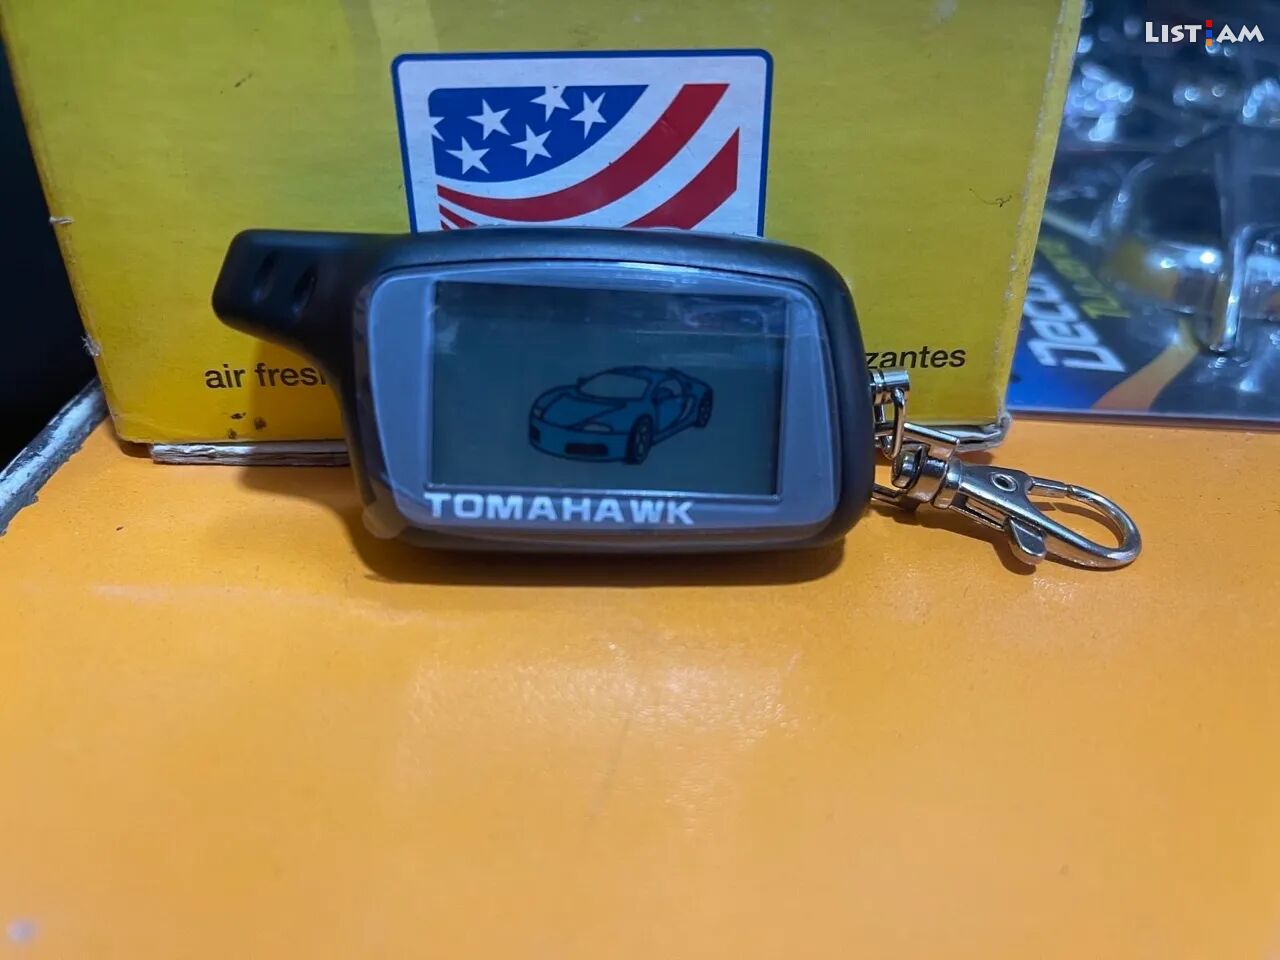 Tomahawk x5